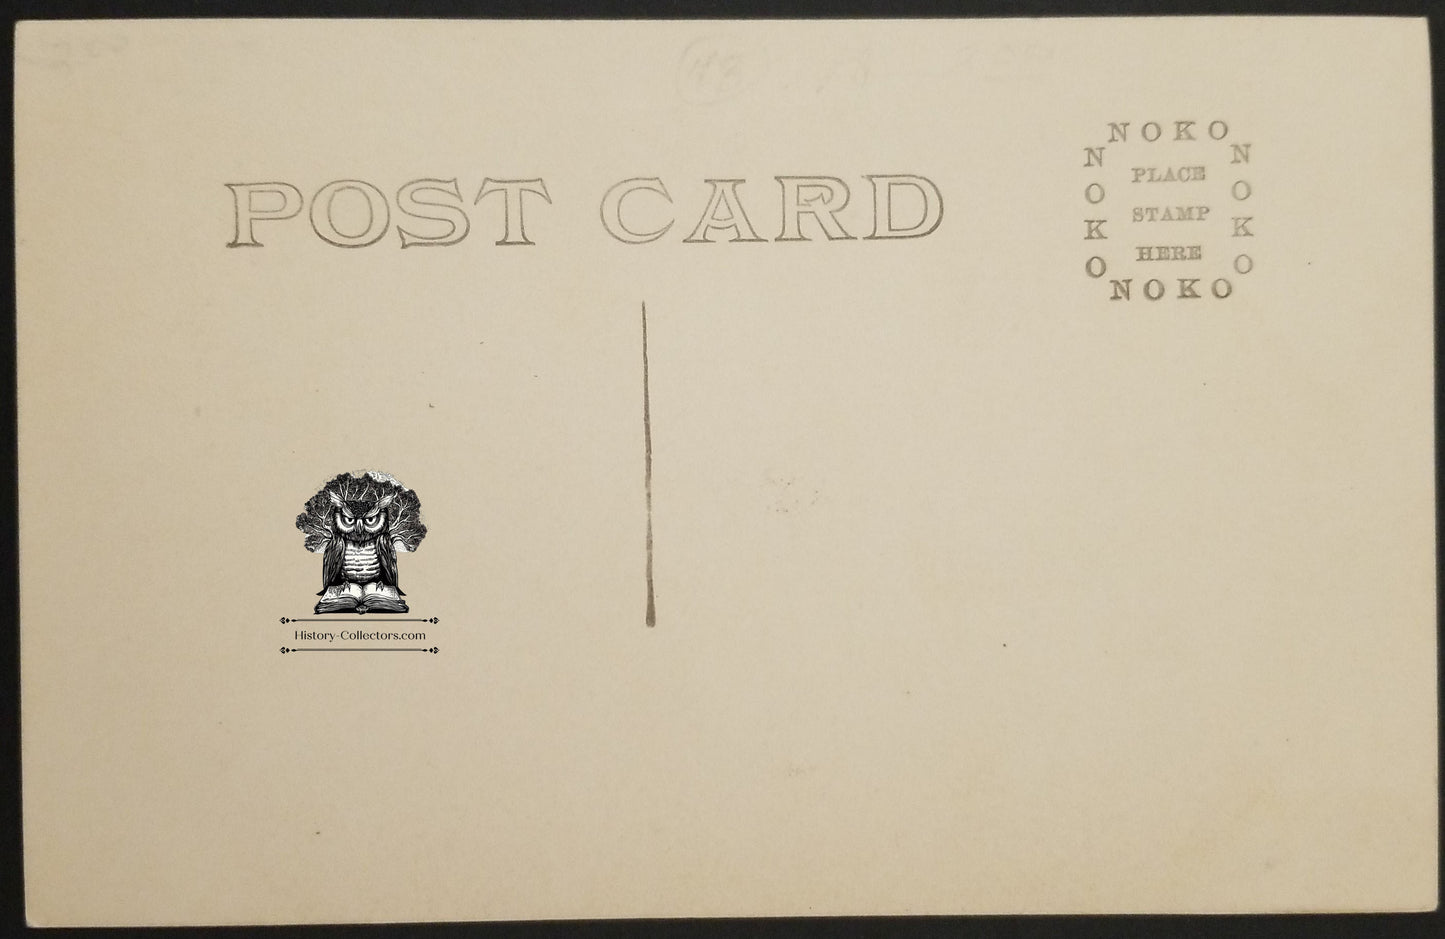 1914 RPPC Picture Postcard - Tornado Storm Damage - Rural Farm Homestead Barn Destruction June 24 - NOKO Stamp Box